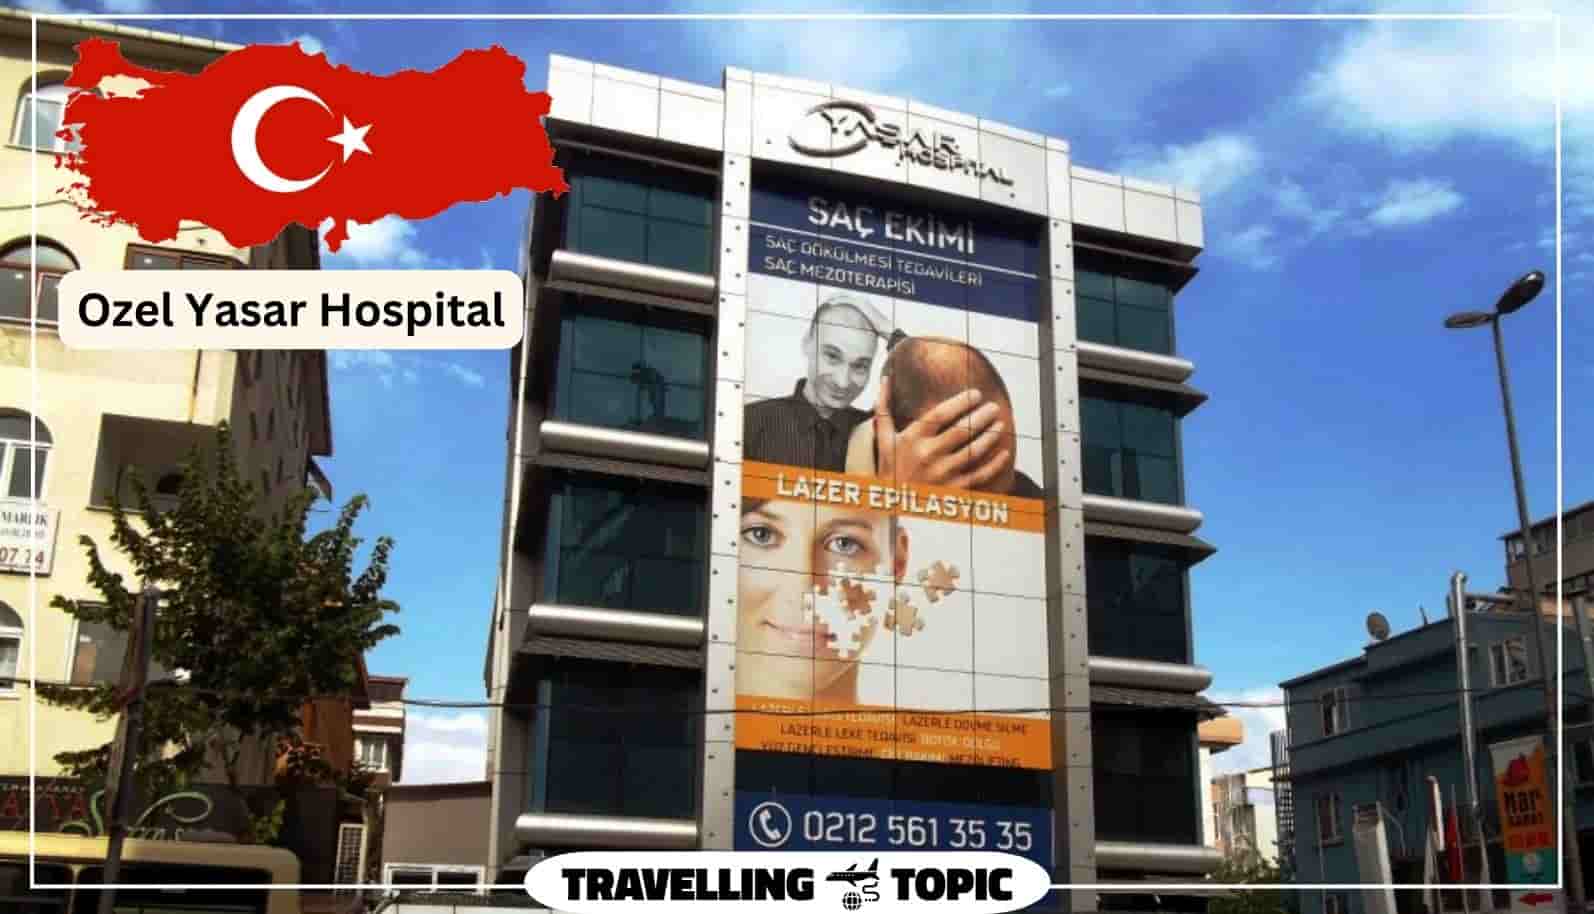 Ozel Yasar Hospital